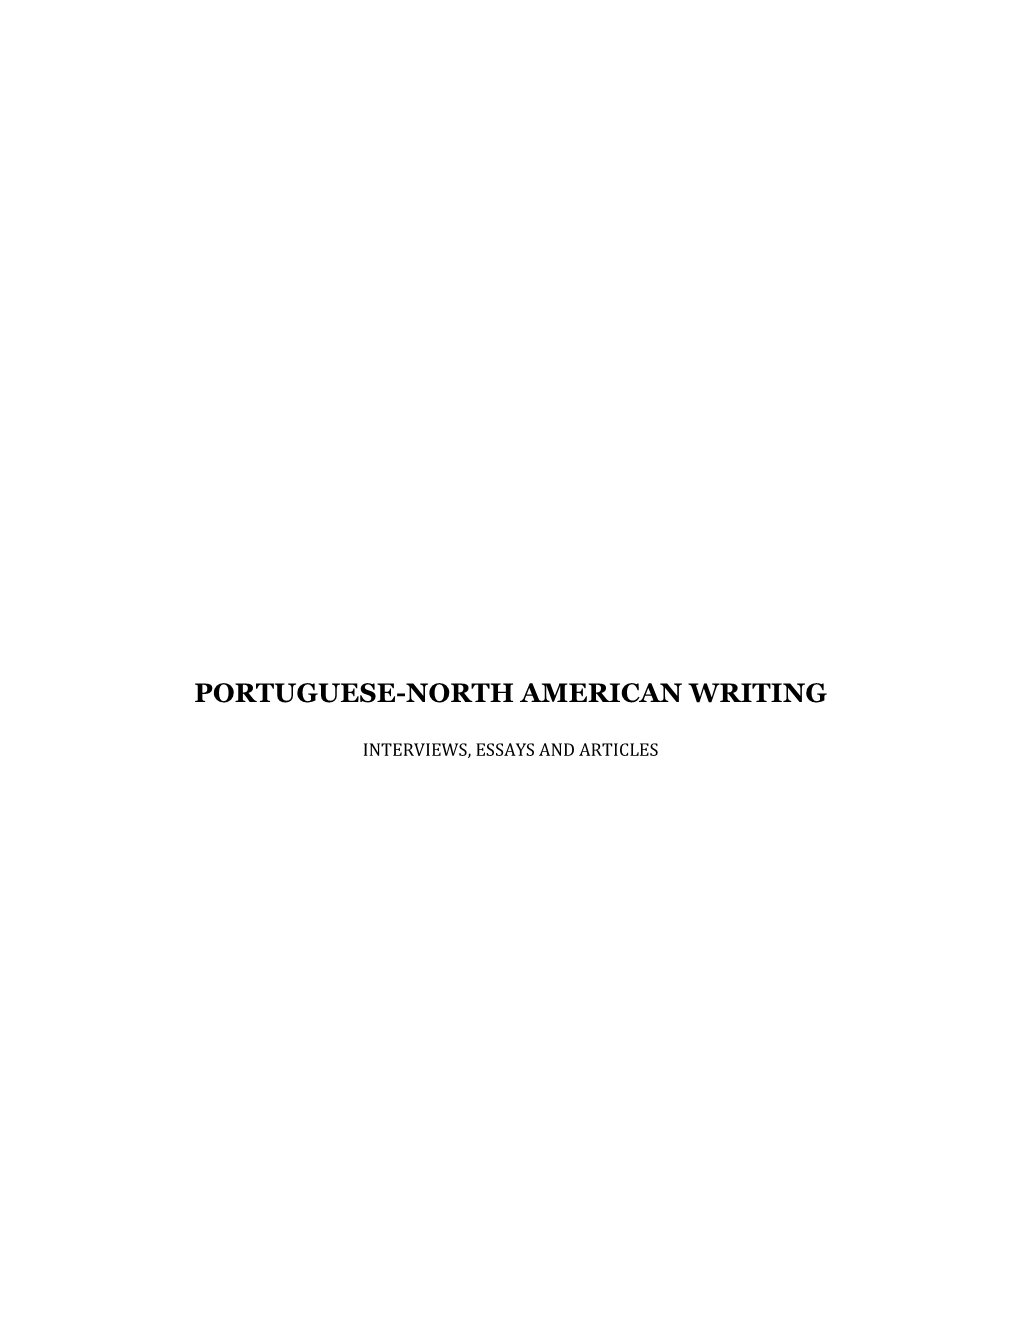 Portuguese-North American Writing